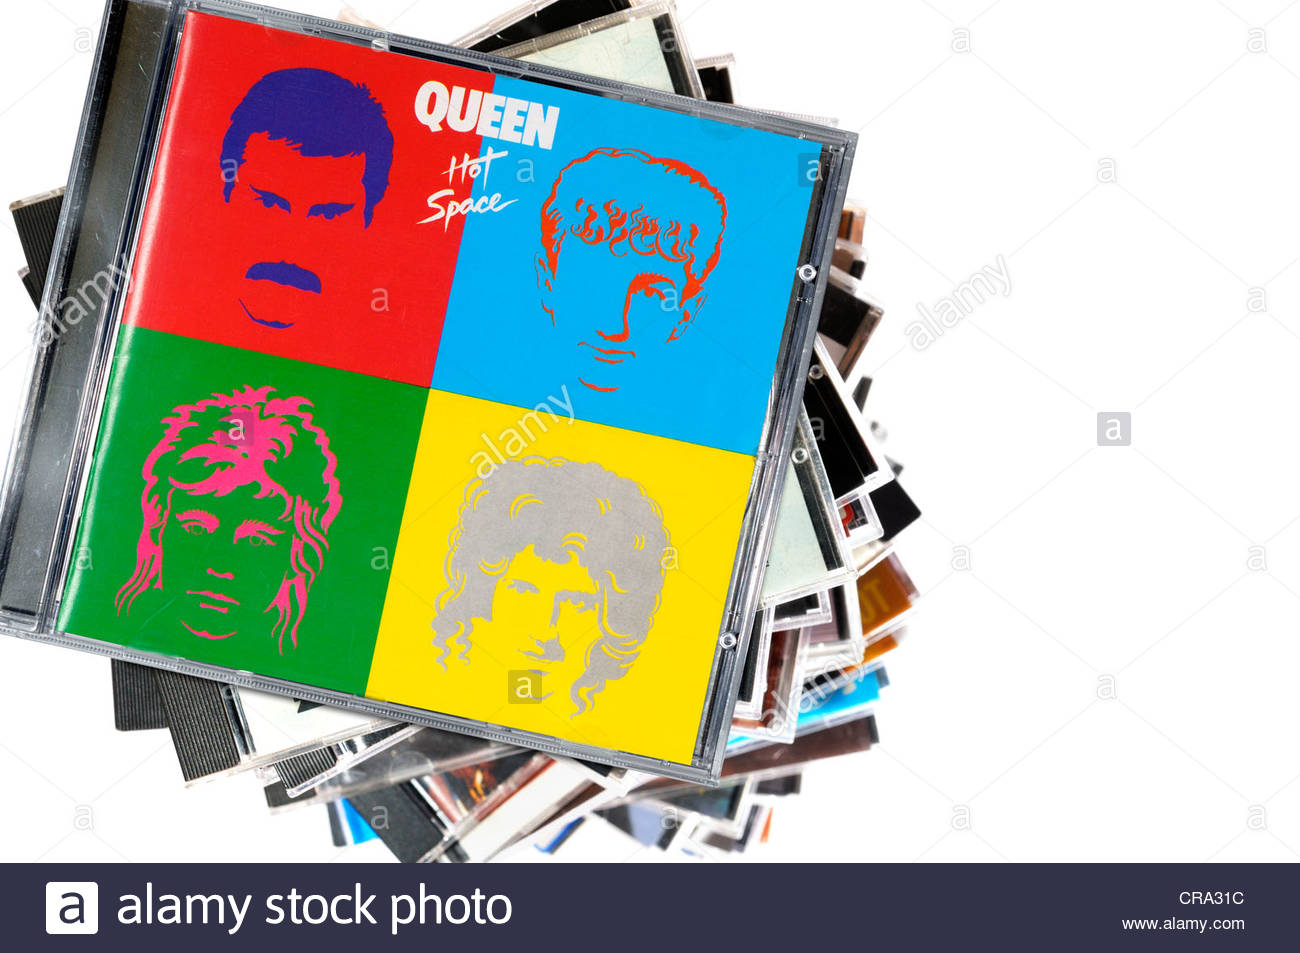 Queen Album Hot Space Cd Cases England Stock Photo Alamy